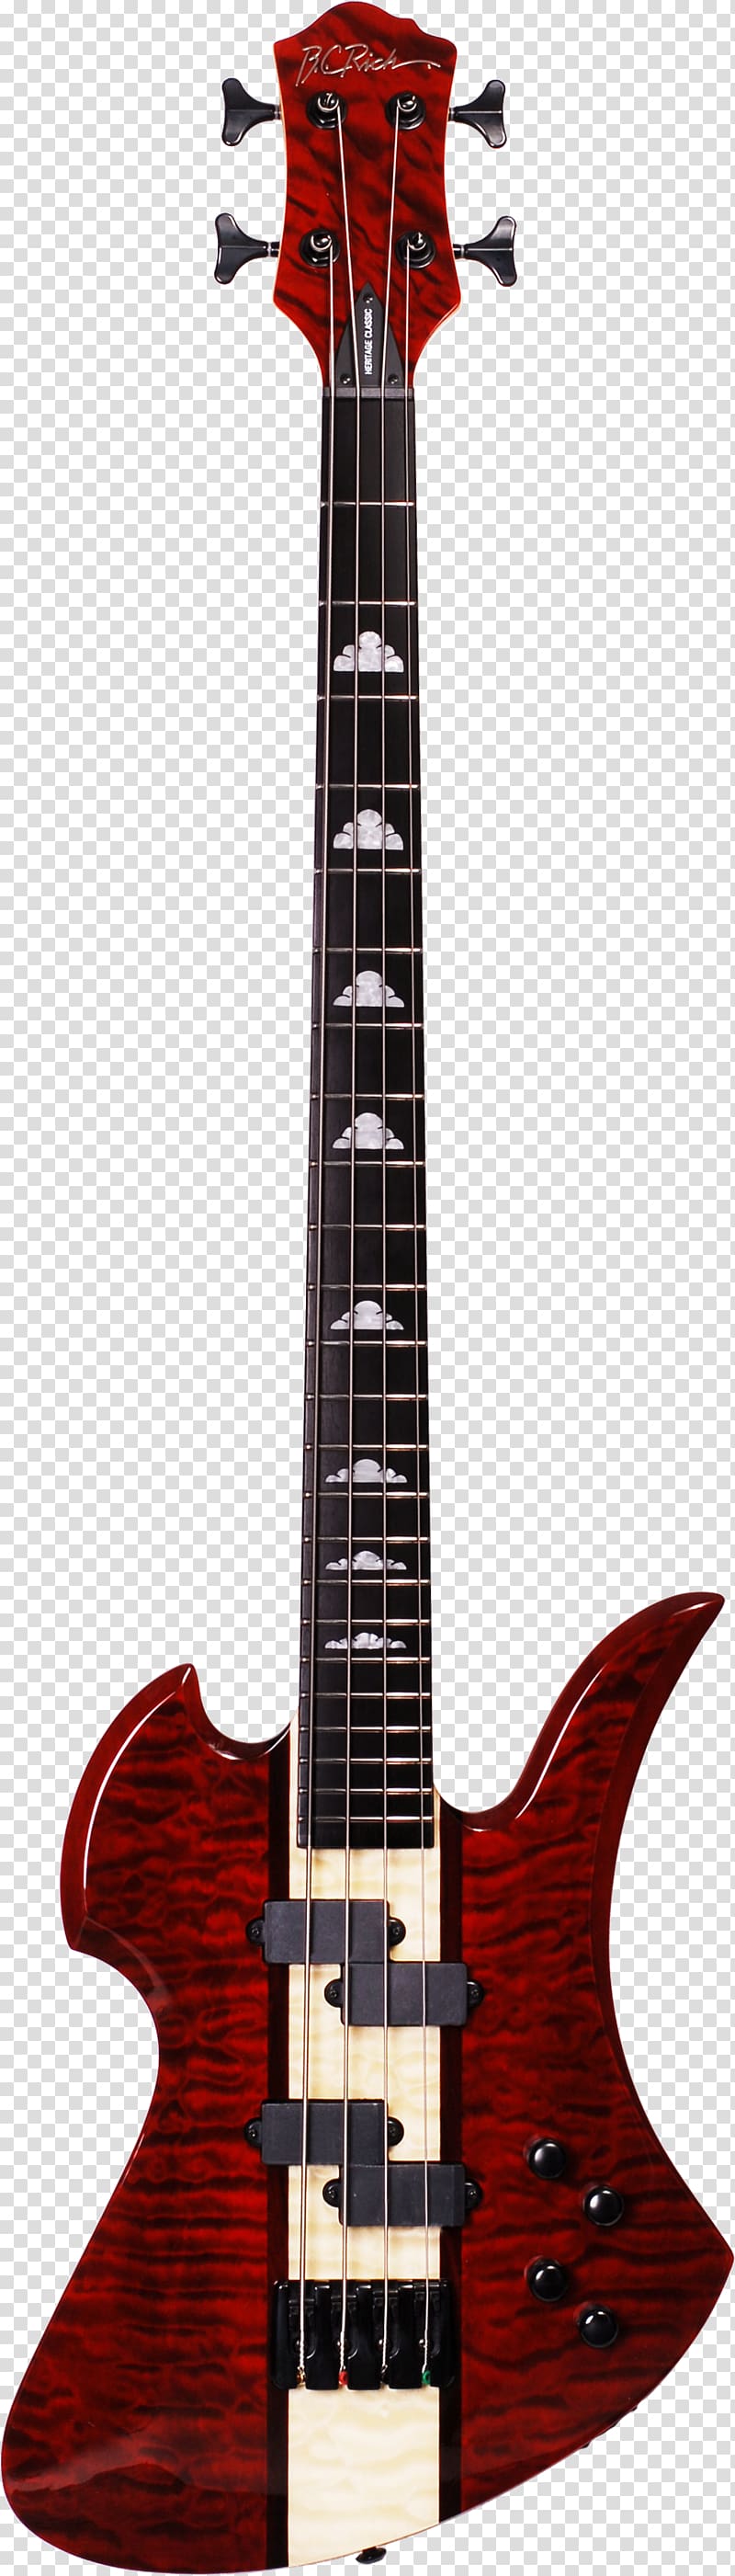 Bass guitar Electric guitar B.C. Rich Vibrato systems for guitar, Bass Guitar transparent background PNG clipart